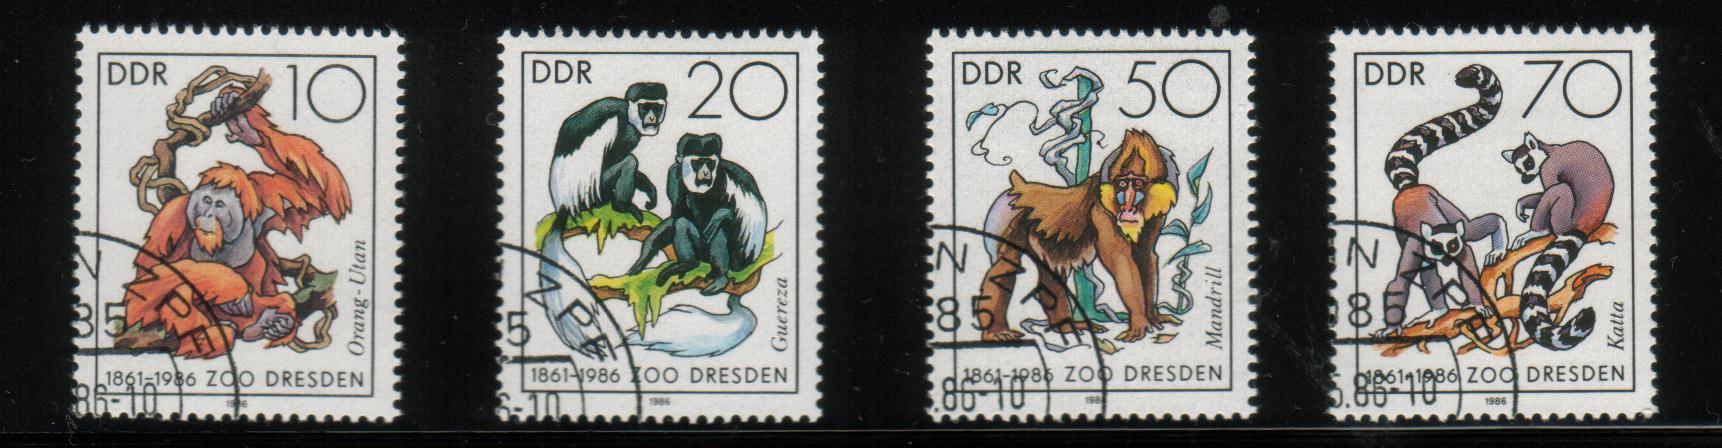 DDR 1986 DRESDEN ZOO (APES) SET OF 4 VFU - Singes